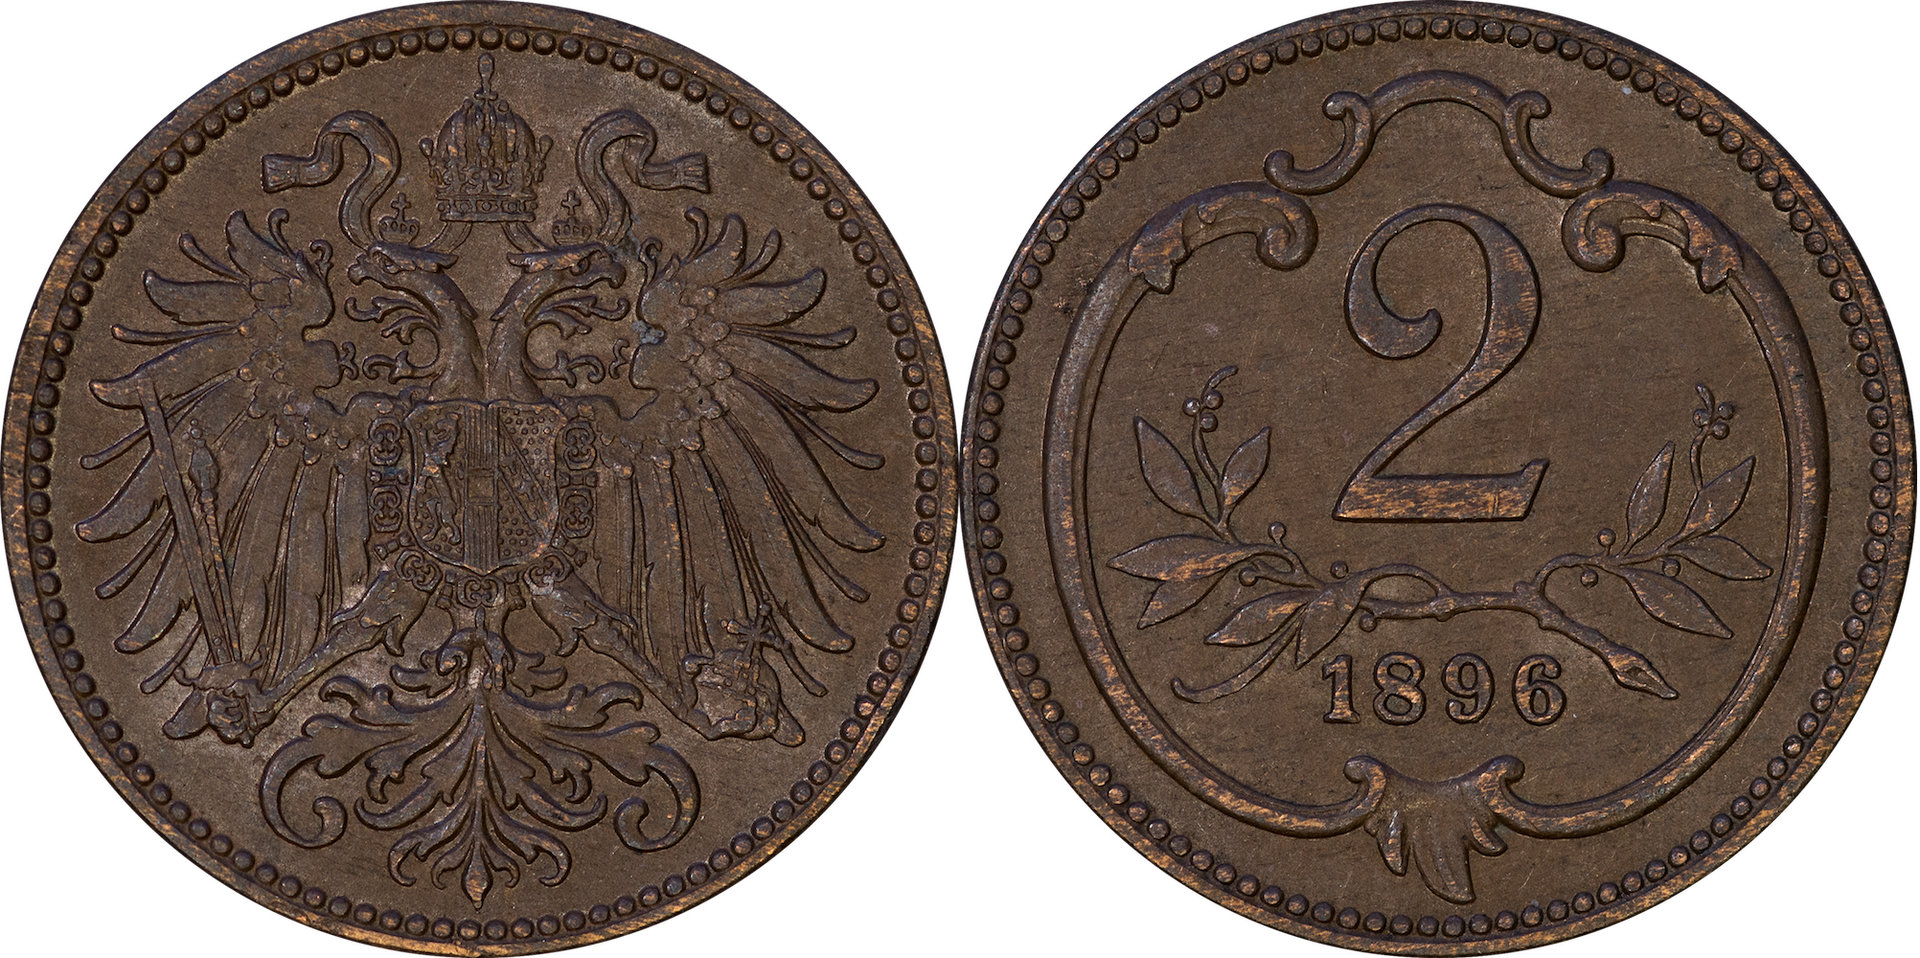 Austria - 1896 2 Heller.jpg